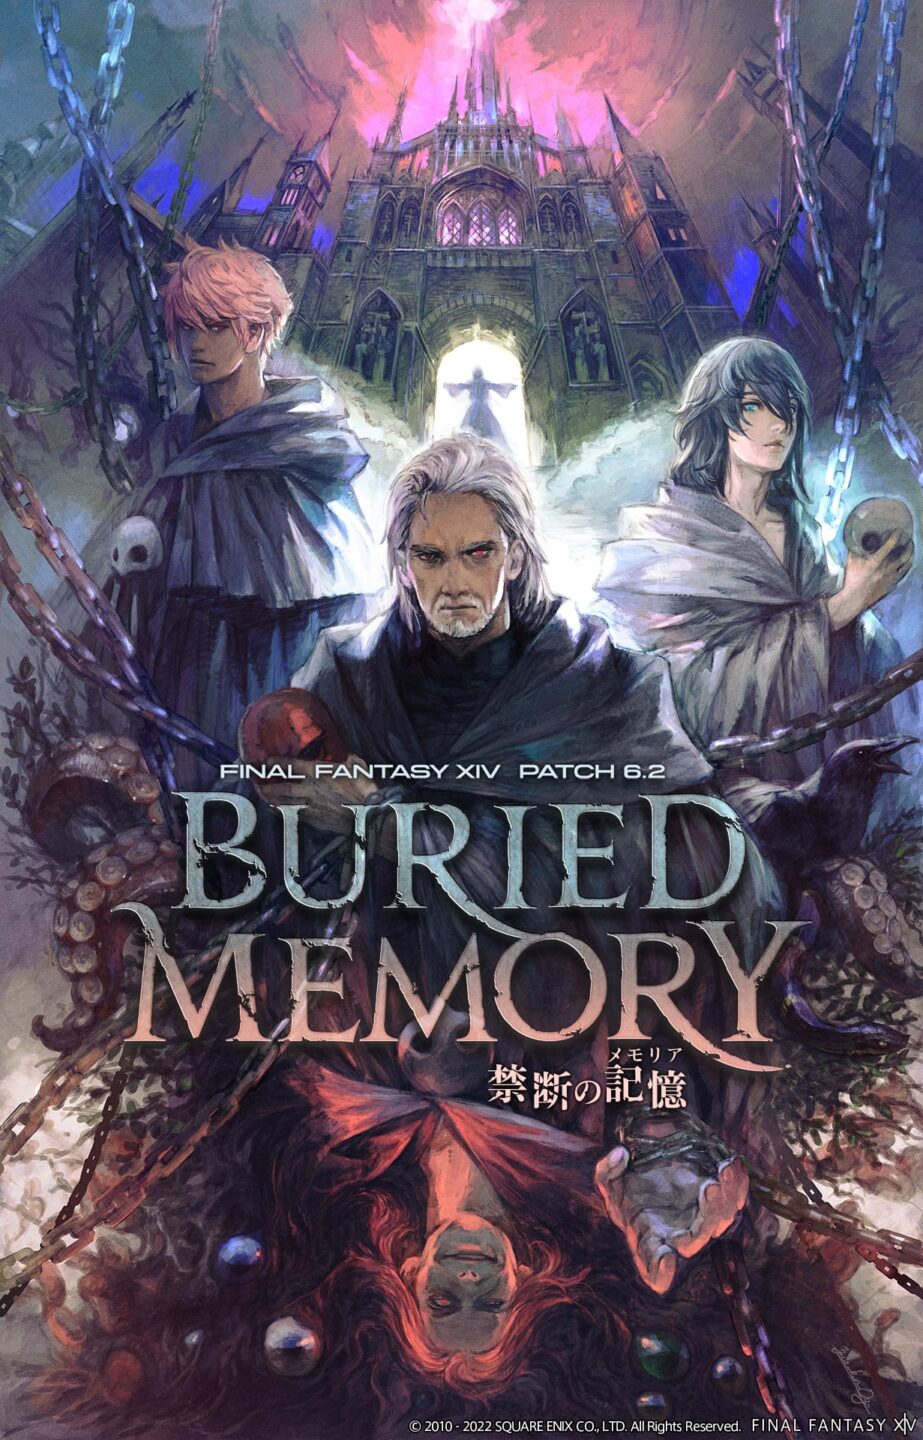 Final Fantasy XIV: Online - Buried Memory